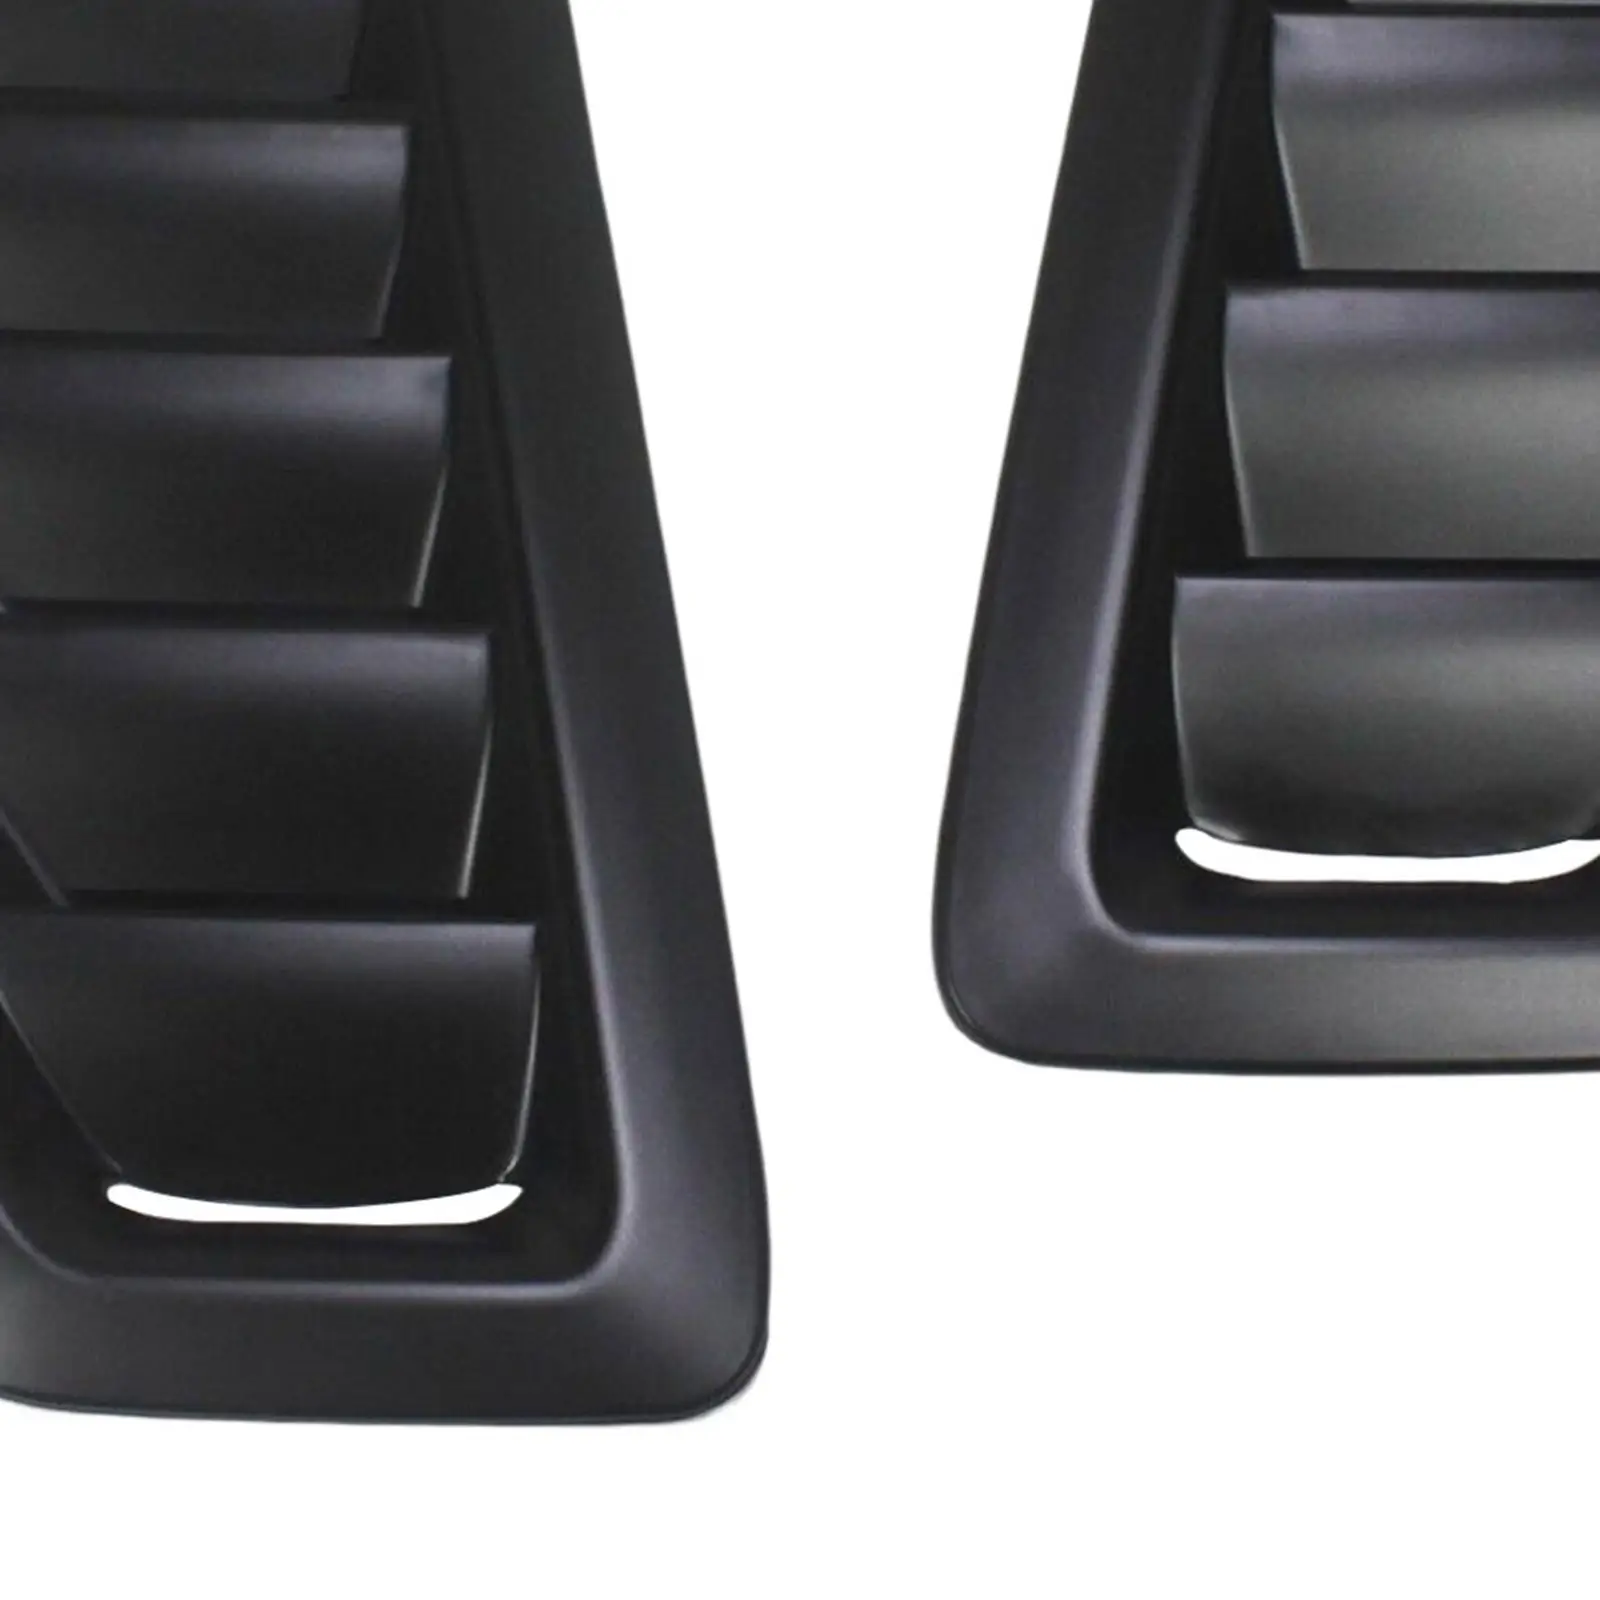 2x Car Hood Vent Scoop Kit Bonnet Air Vents Hood Trim for Ford Focus RS Style Car Modified Accessory Matte Black Finish